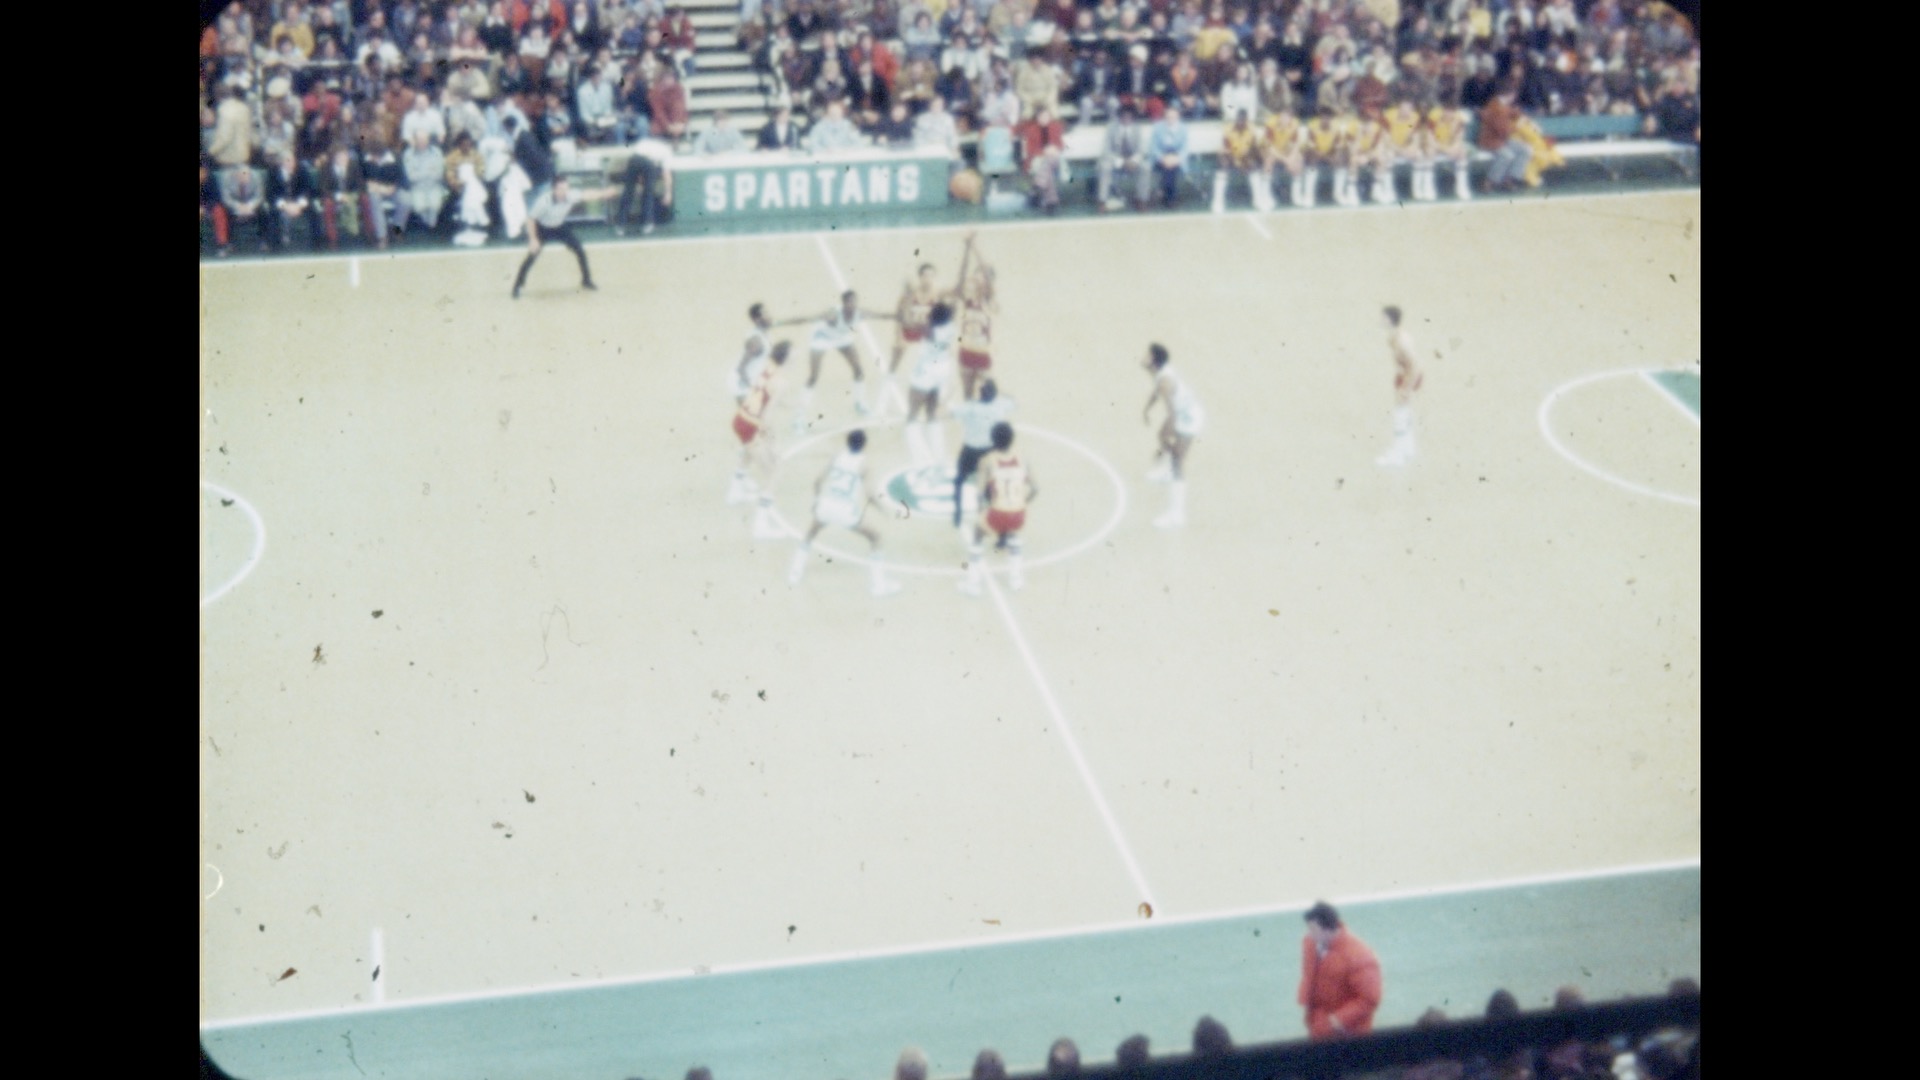 MSU Basketball vs. Minnesota (home), 1976